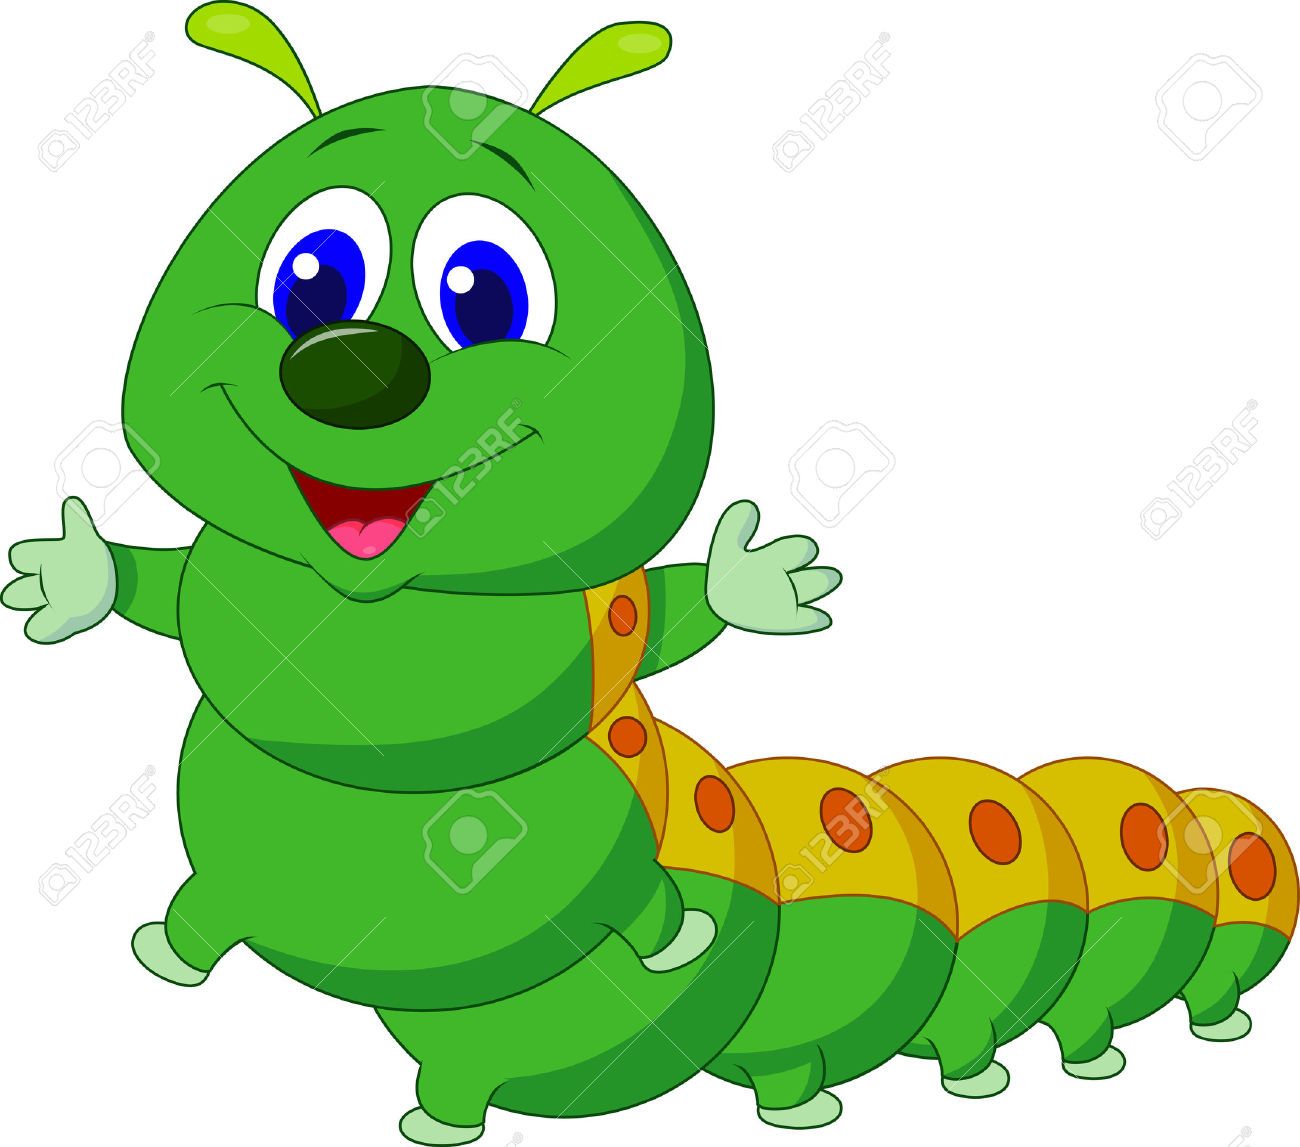 Worm clipart cutterpillar. Caterpillar cartoon stock photos